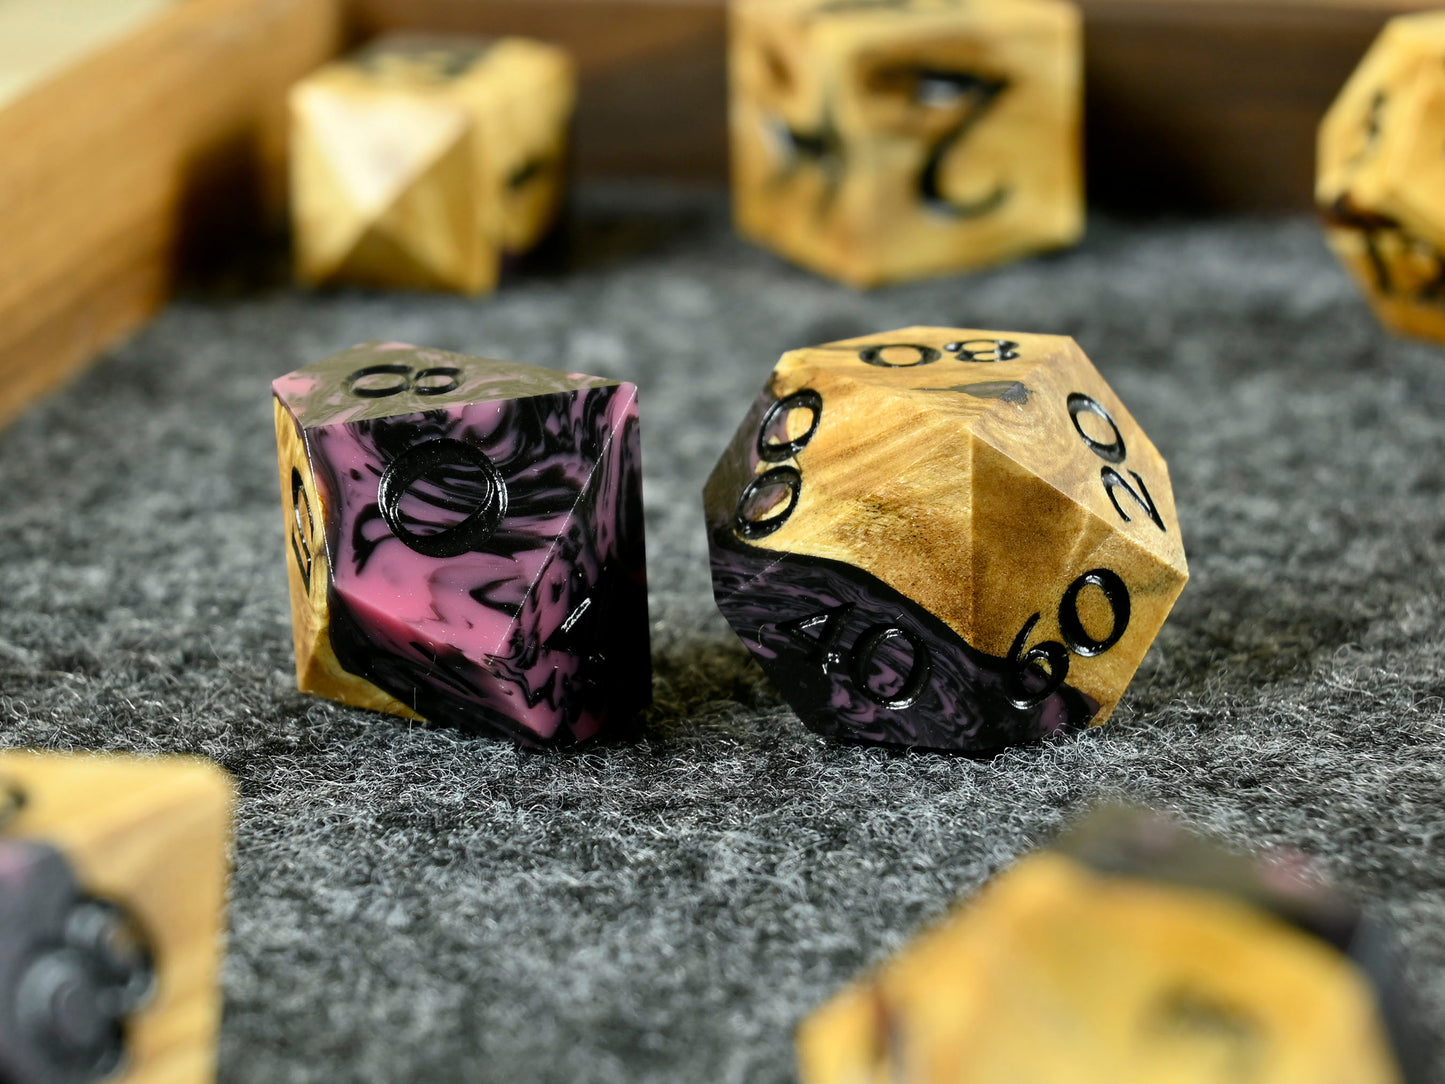 Buckeye burl wood and resin hybrid dice set for dnd ttrpg